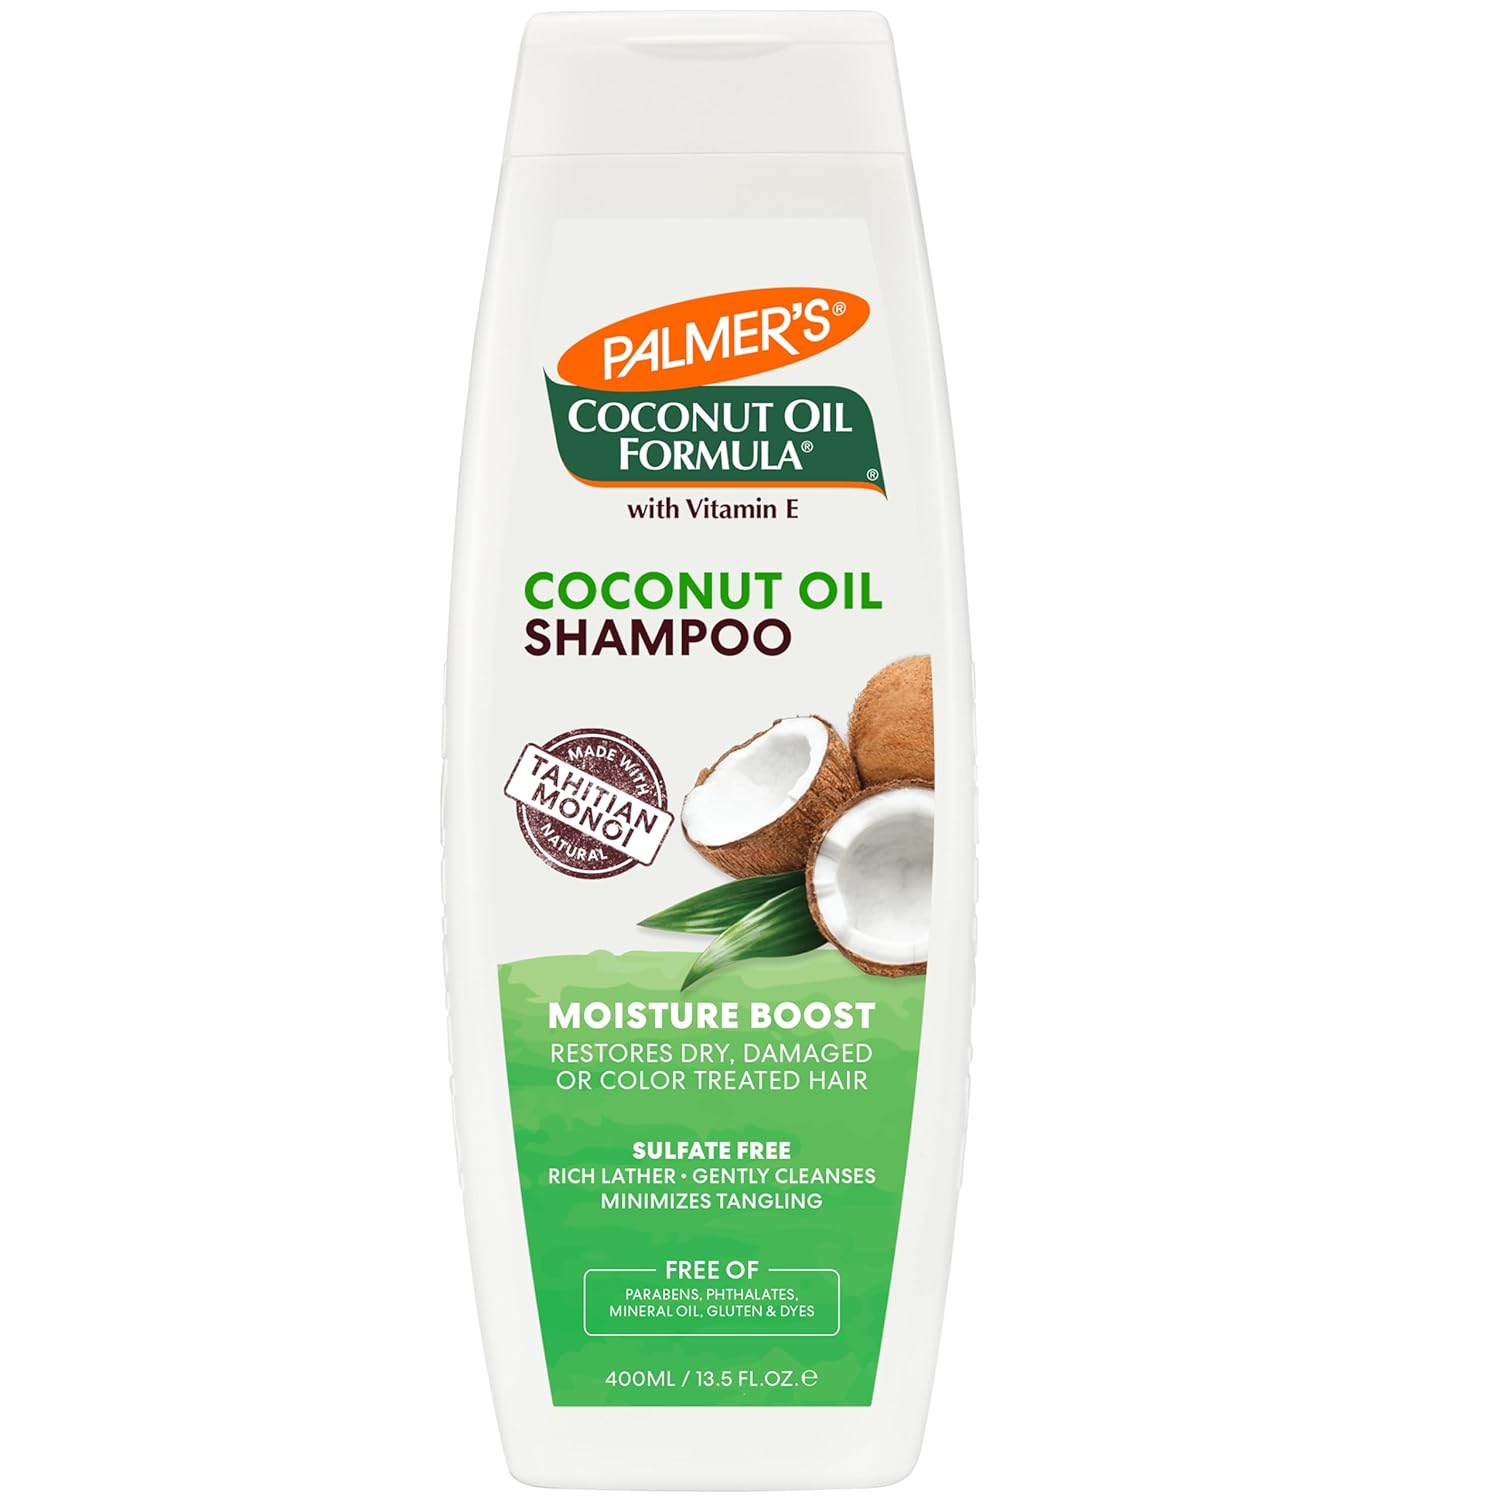 Palmer's Coconut Oil Formula Moisture Boost Conditioning Shampoo, 13.5 fl. oz